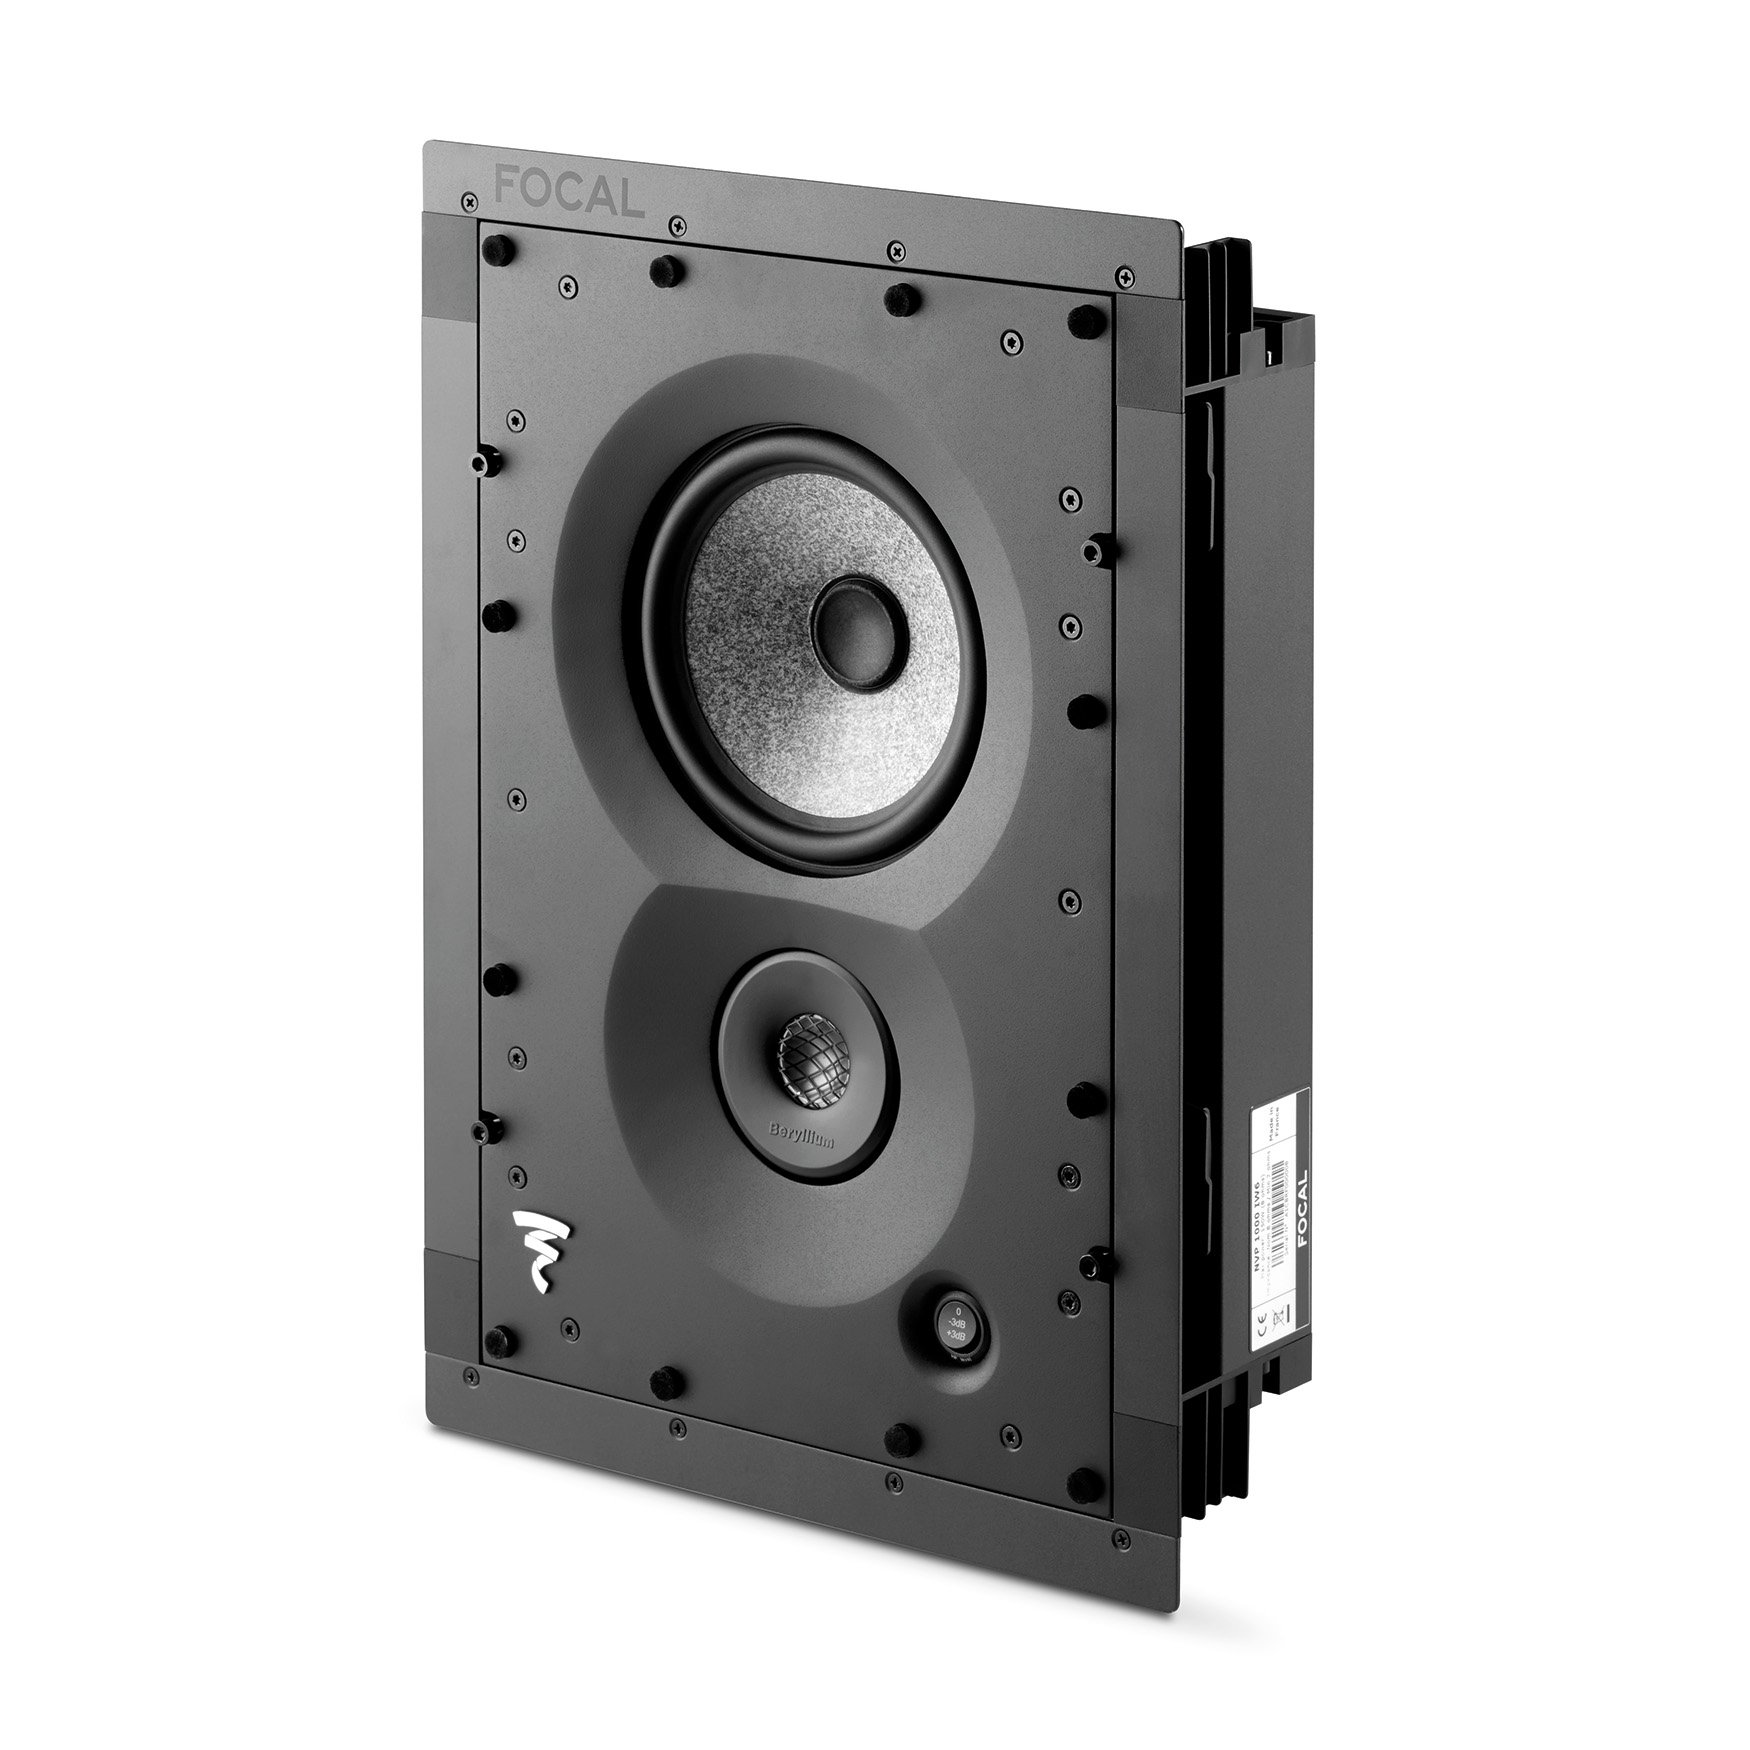 Focal 1000 IW6 Premium In-wall speaker in Winnipeg at Creative Audio (side view)